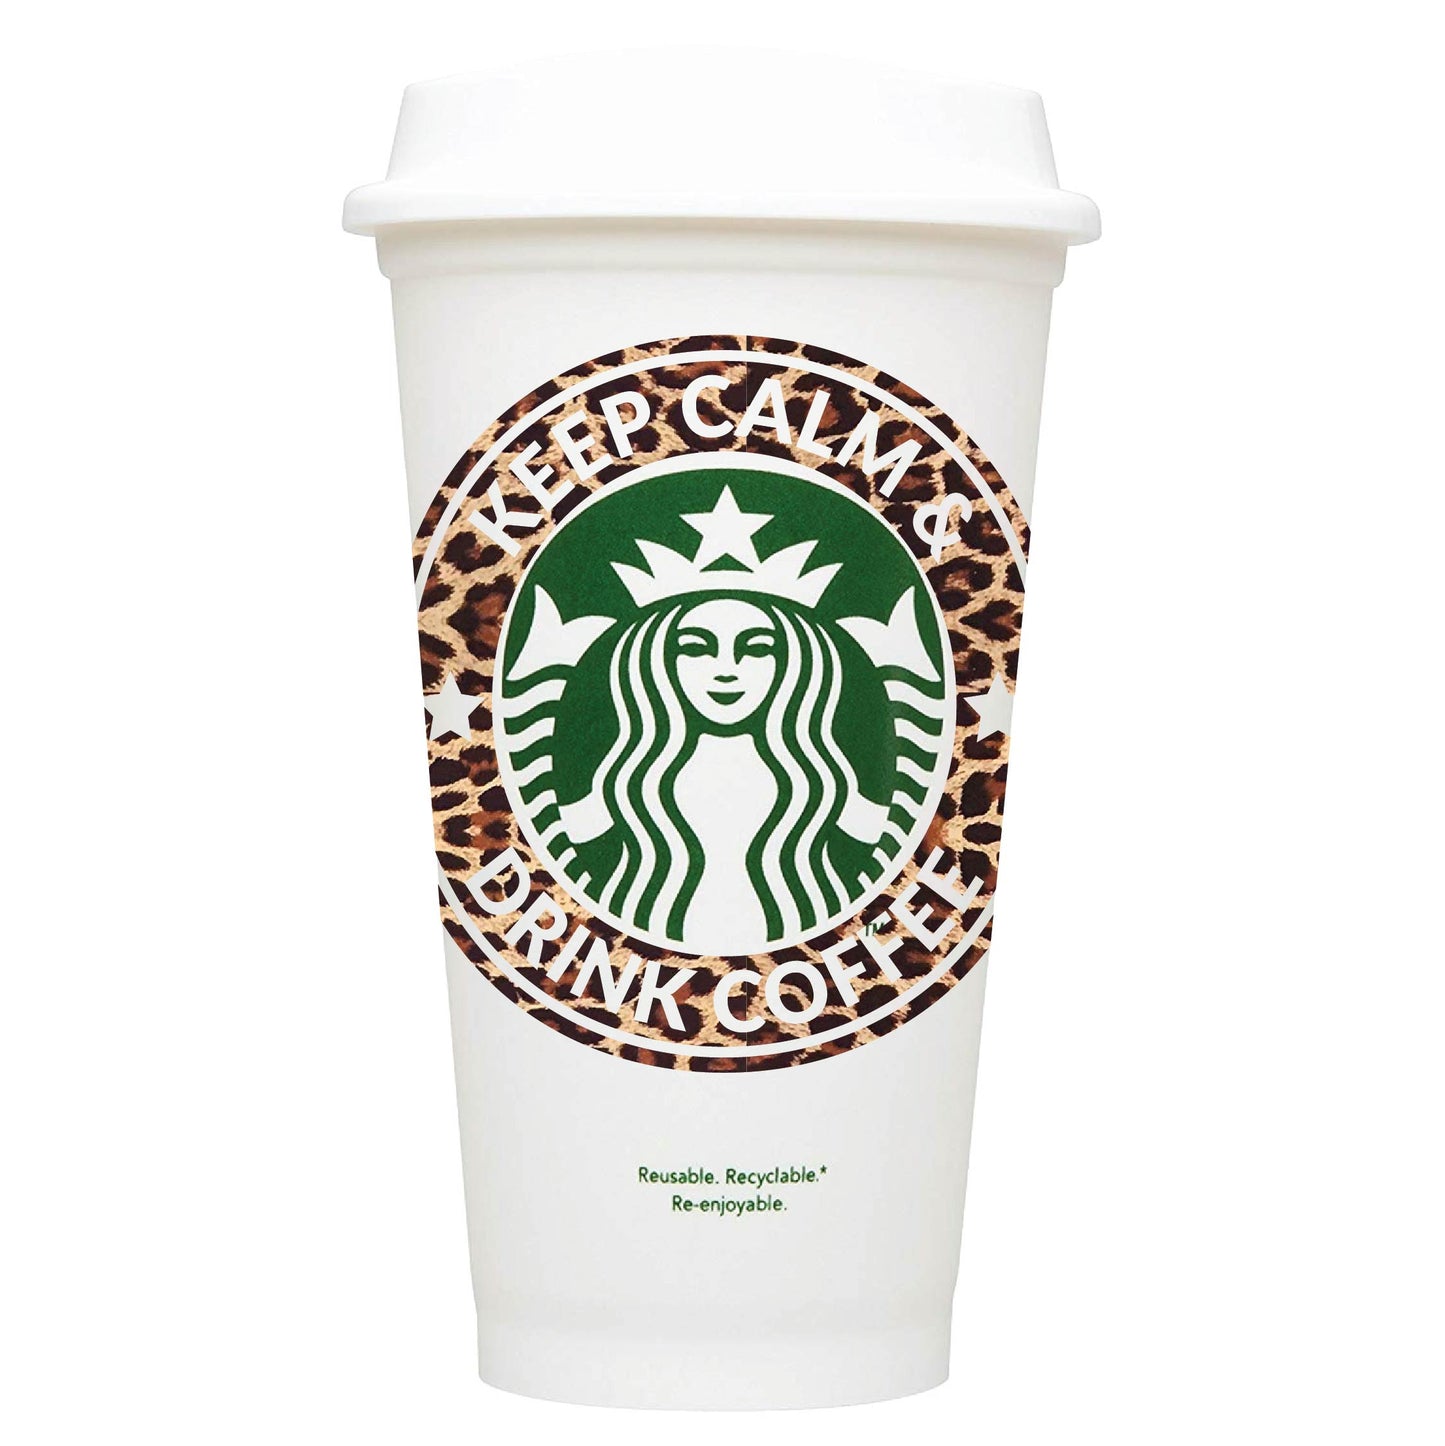 Keep Calm & Drink Coffee Starbucks Hot Cup